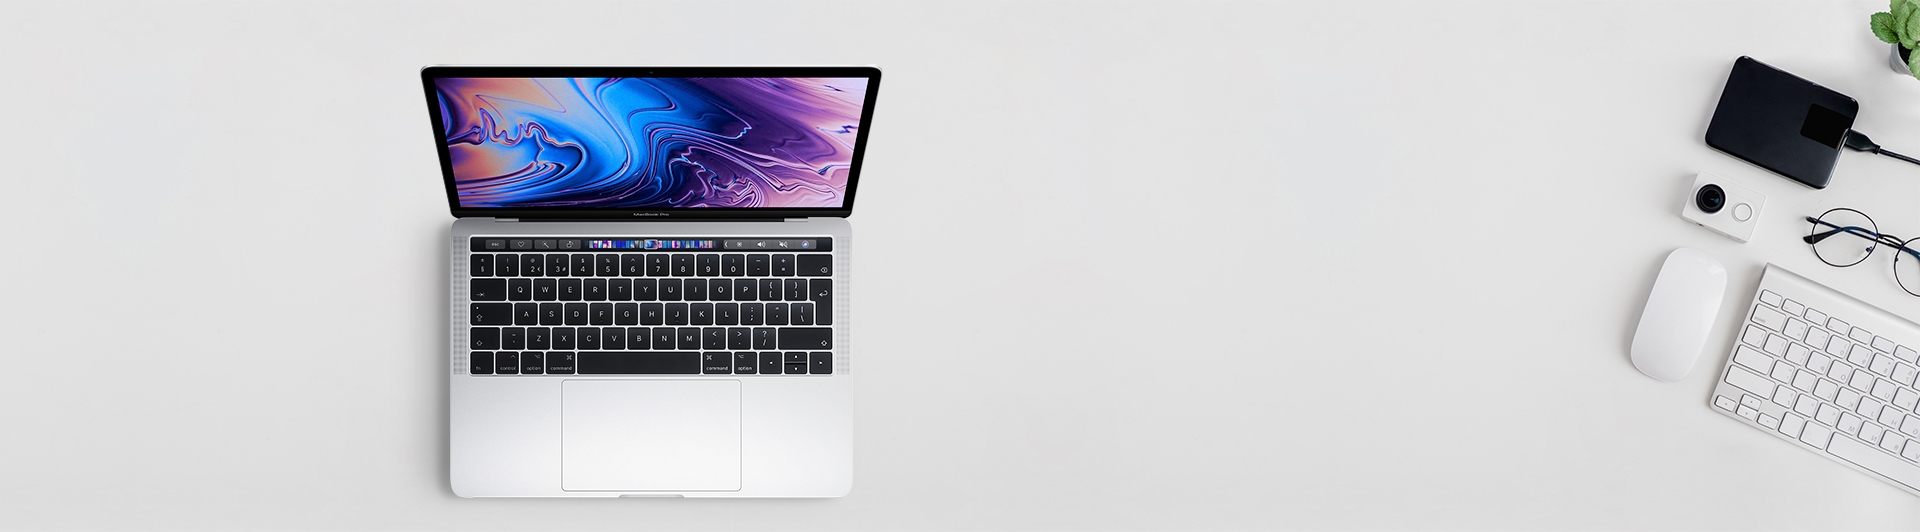 Macbook Pro i5 13.3 inch (MUHQ2SA/A) 2019